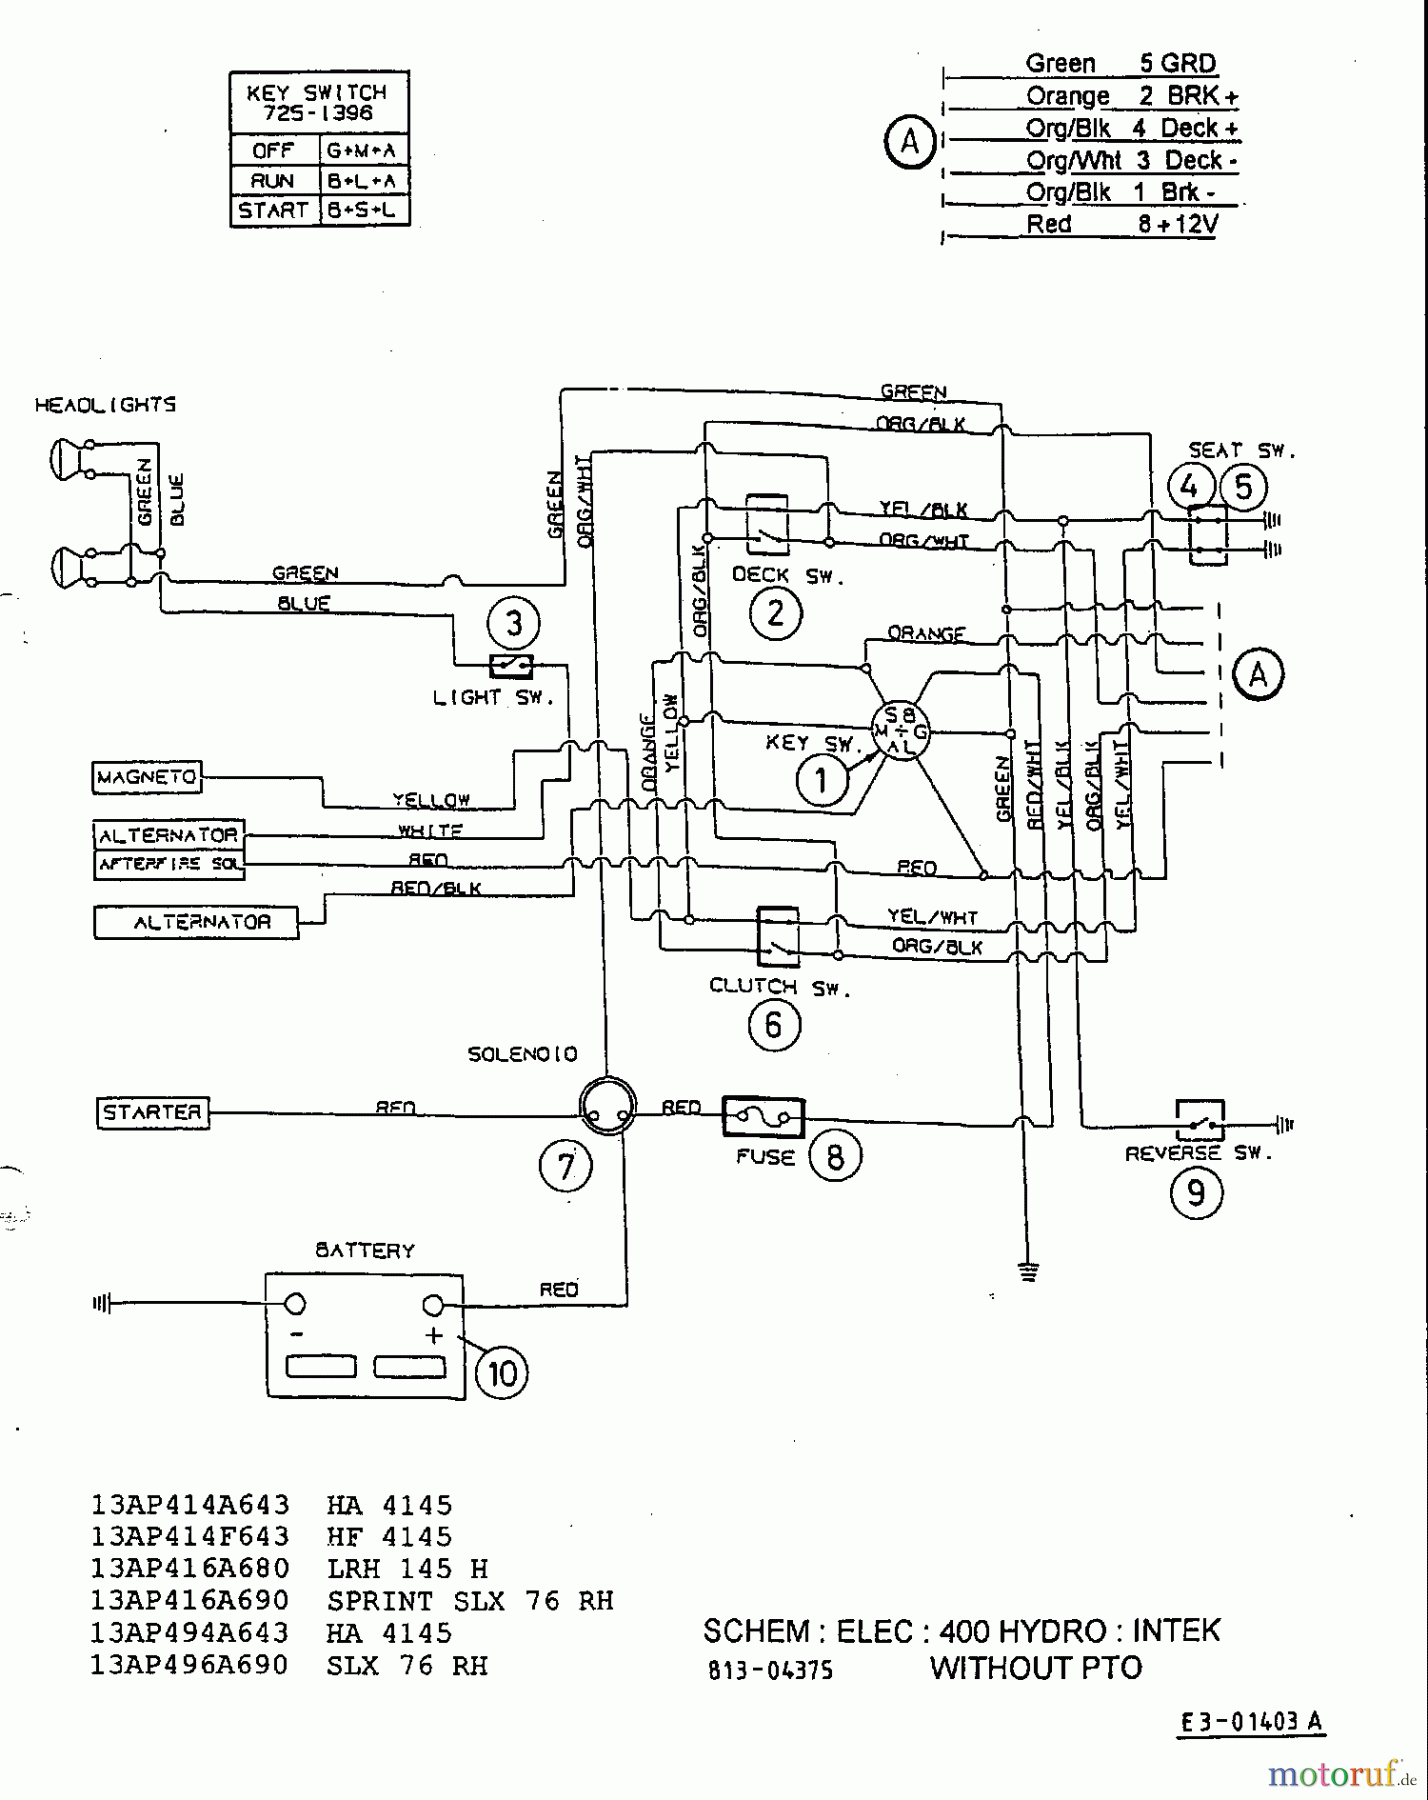  Gutbrod Rasentraktoren SLX 76 RH 13AP416A690  (2002) Schaltplan Intek ohne Elektromagnetkupplung